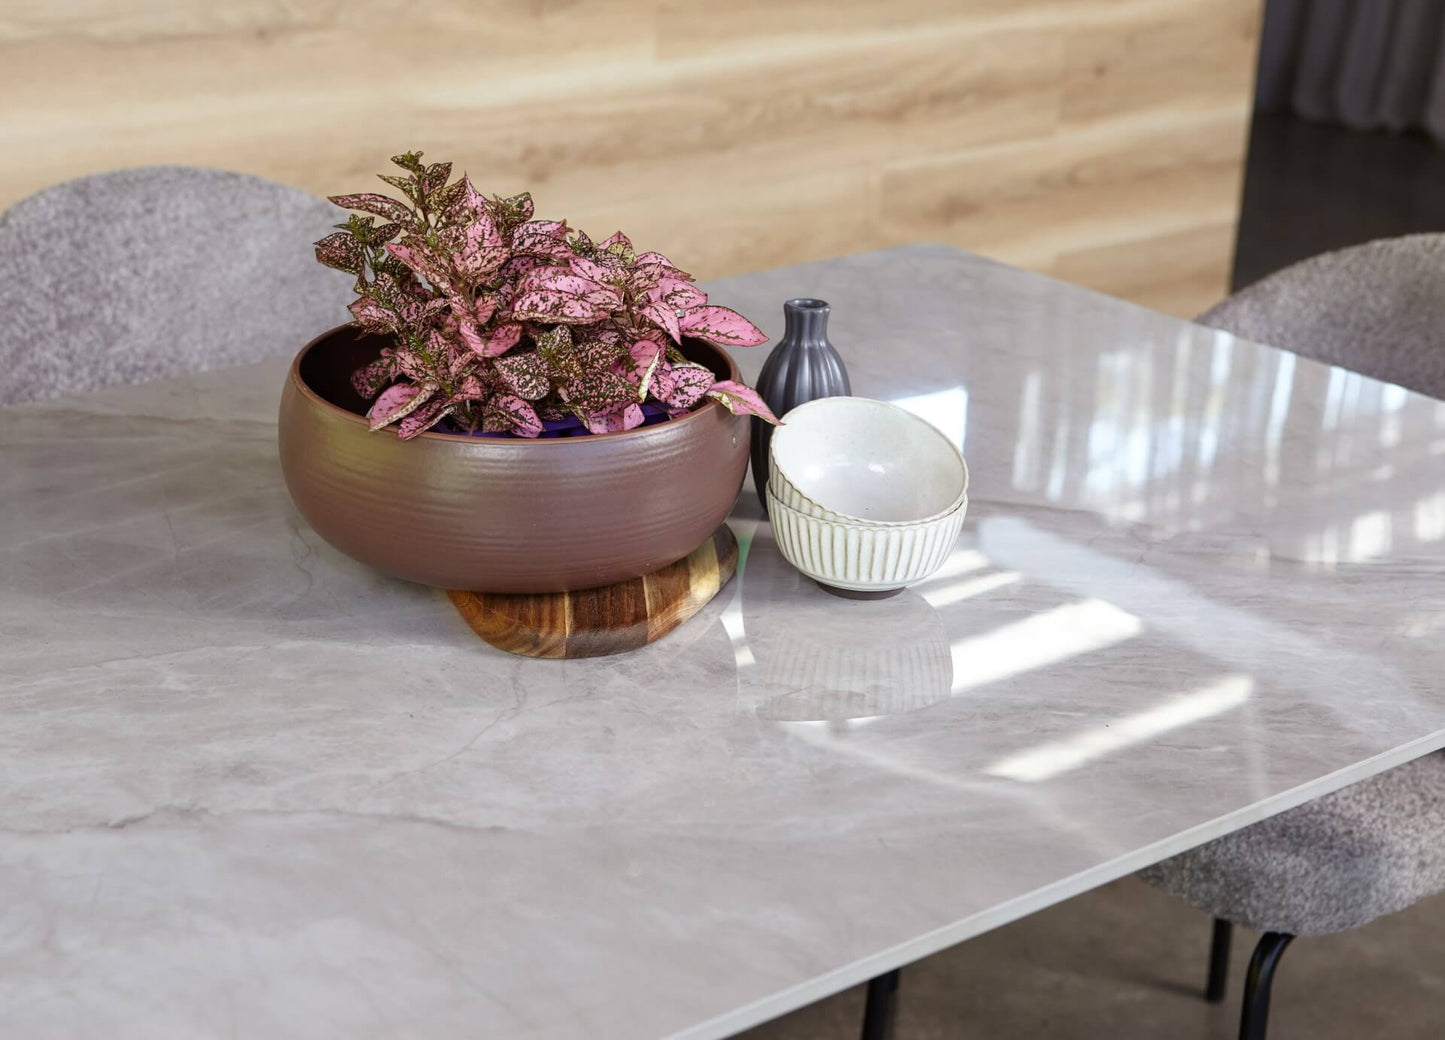 Lunetta | Metal Polished Ceramic Grey Rectangular Dining Table | Grey